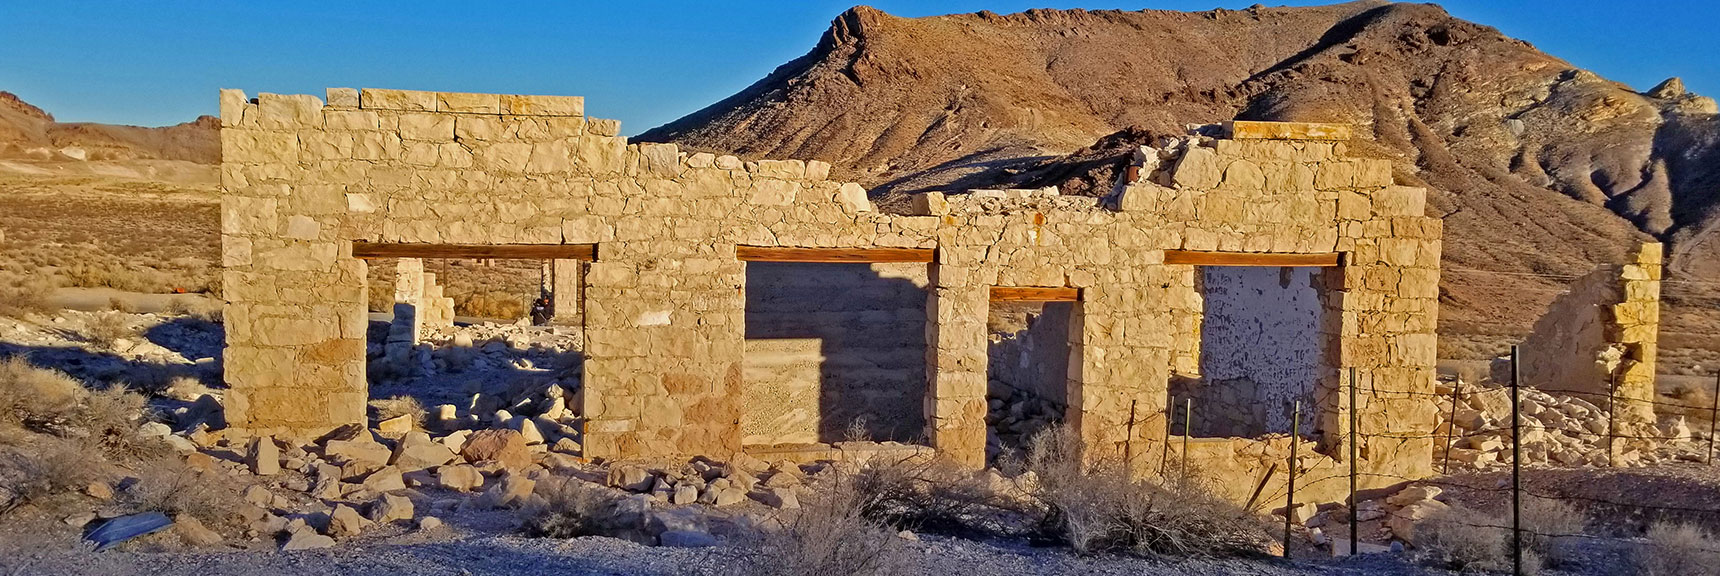 Overbury Bank Building | Rhyolite Ghost Town | Death Valley Area, Nevada